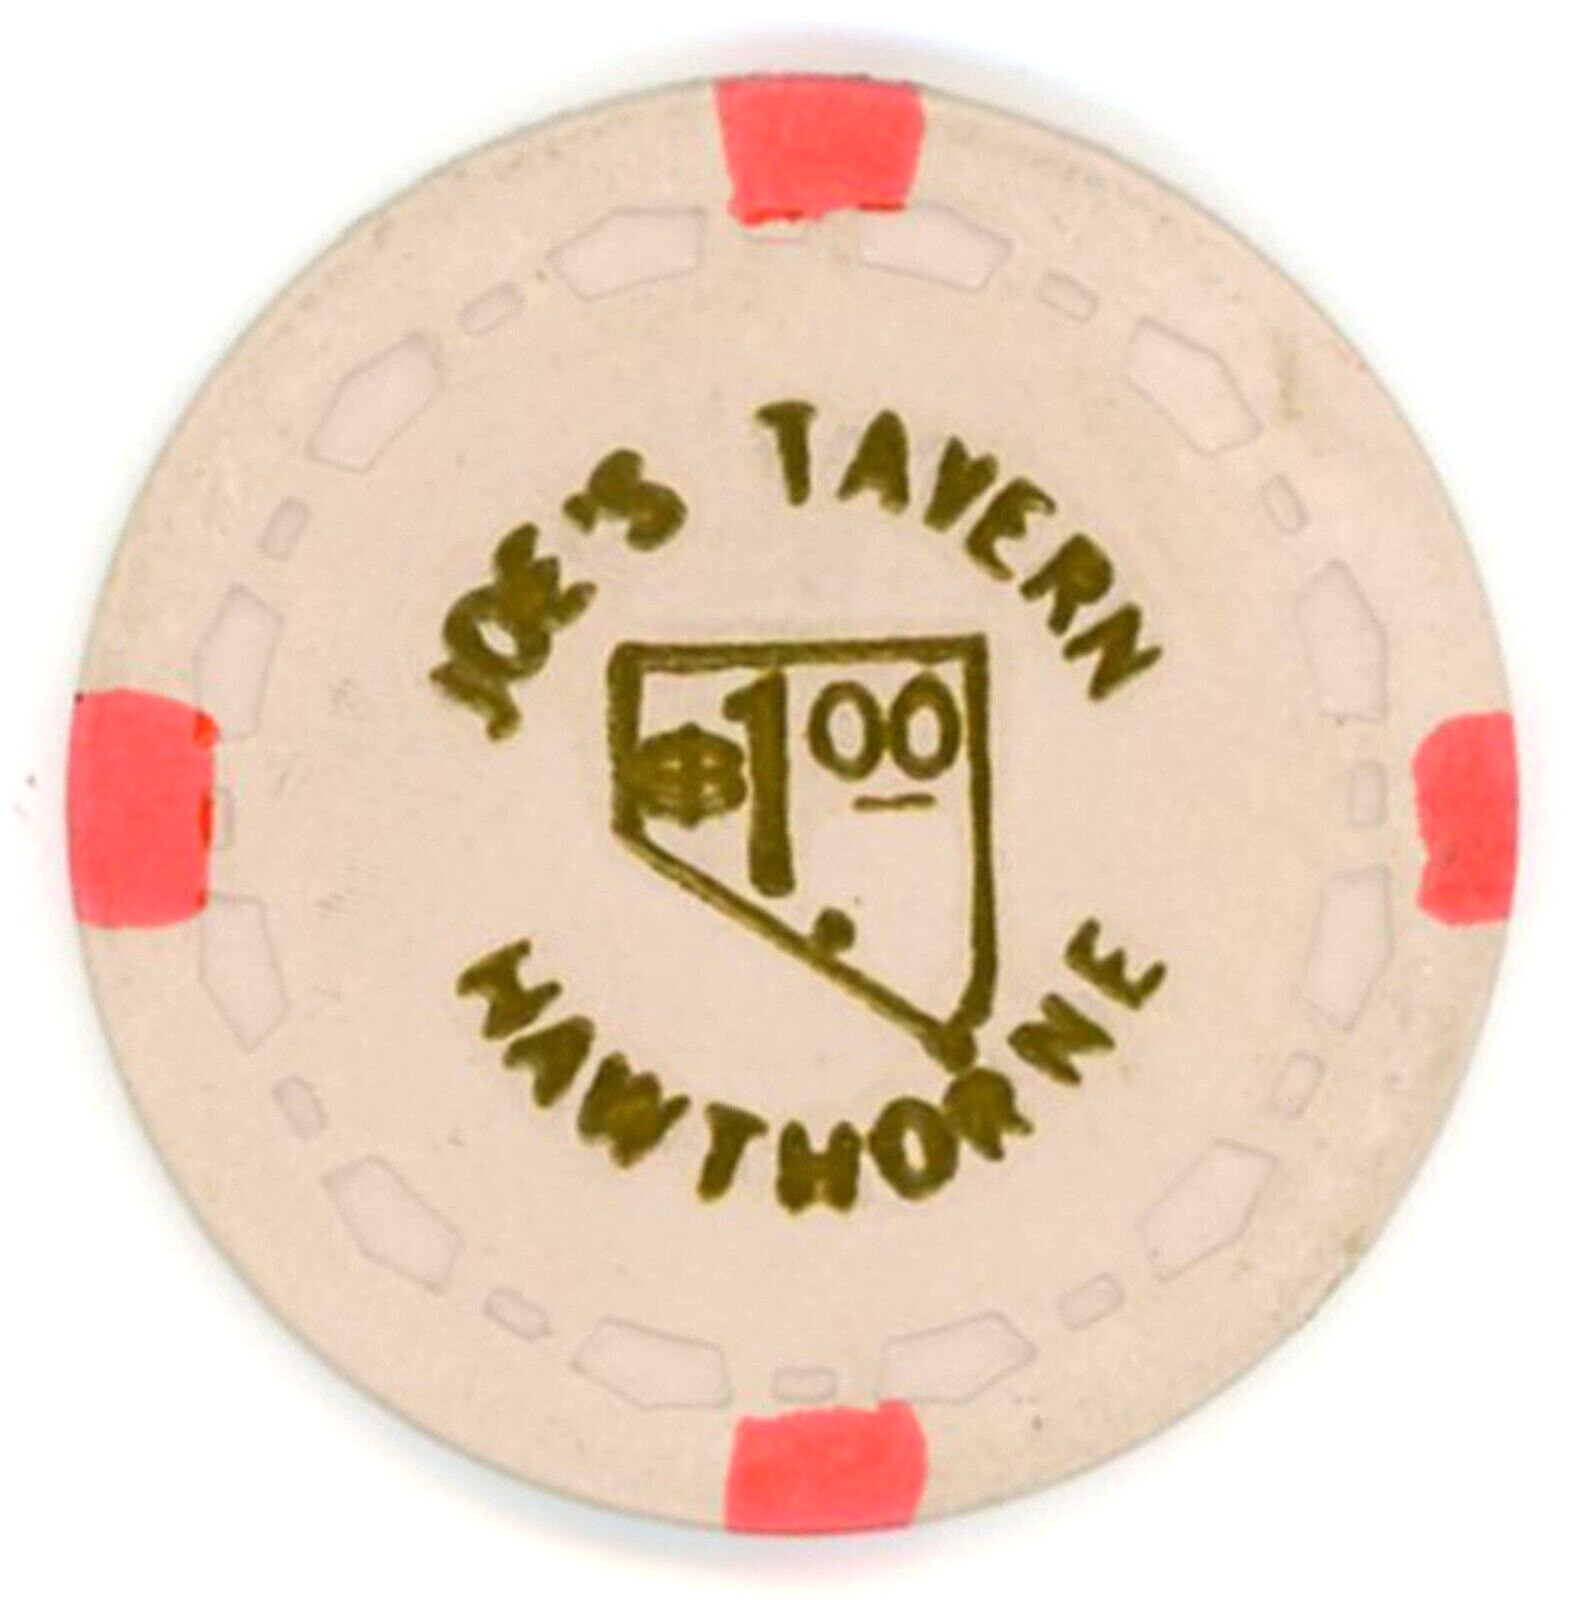 Joe\'s Tavern Casino - Hawthorne, Nevada - $ 1 Chip - 1964